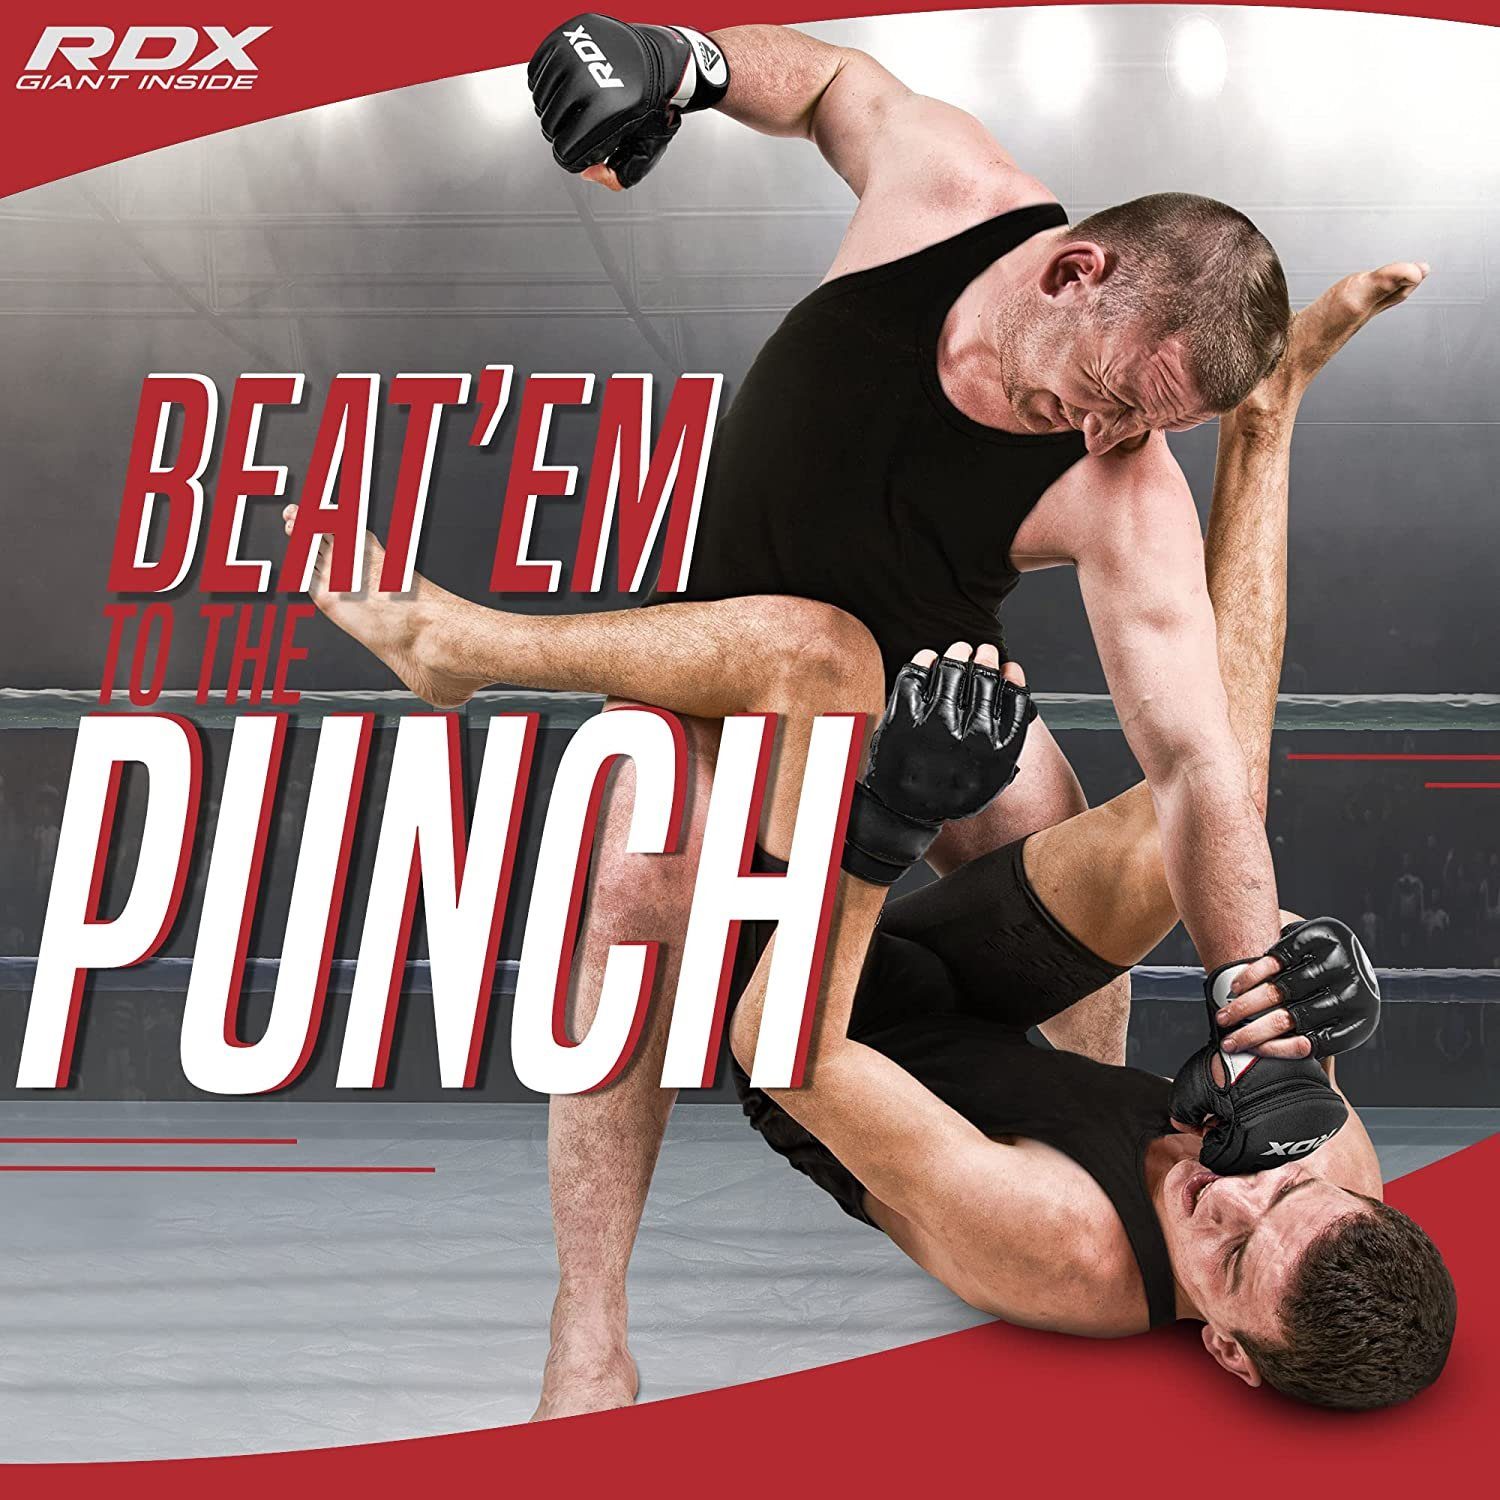 Gloves RDX MMA-Handschuhe MMA Kampfsport RDX Red Handschuhe, Sports MMA Professionelle Boxsack